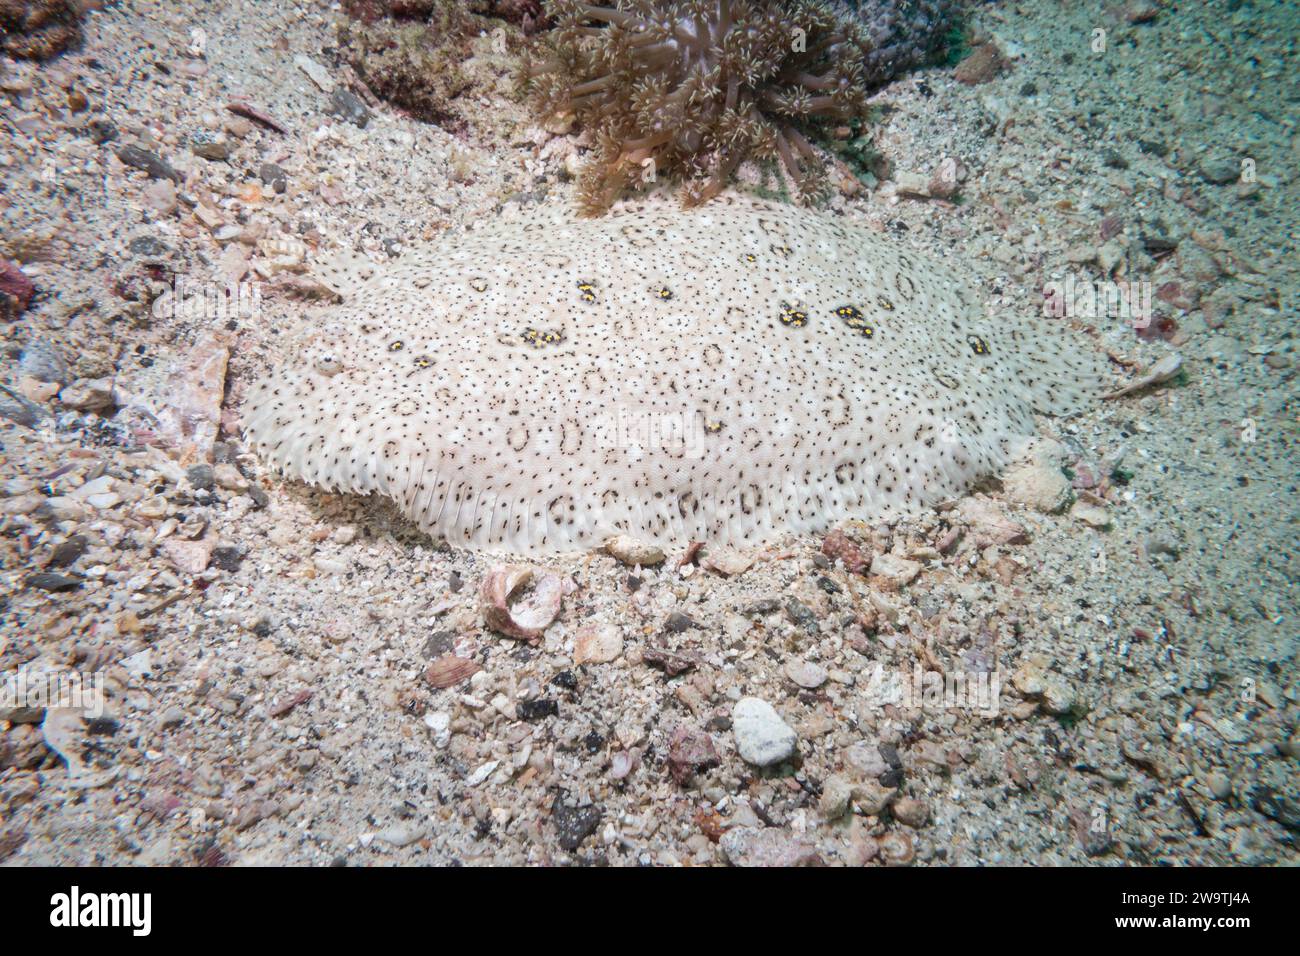 Moses Sole flat fish hiding in the sandy bottom, Musandam, Oman Stock Photo